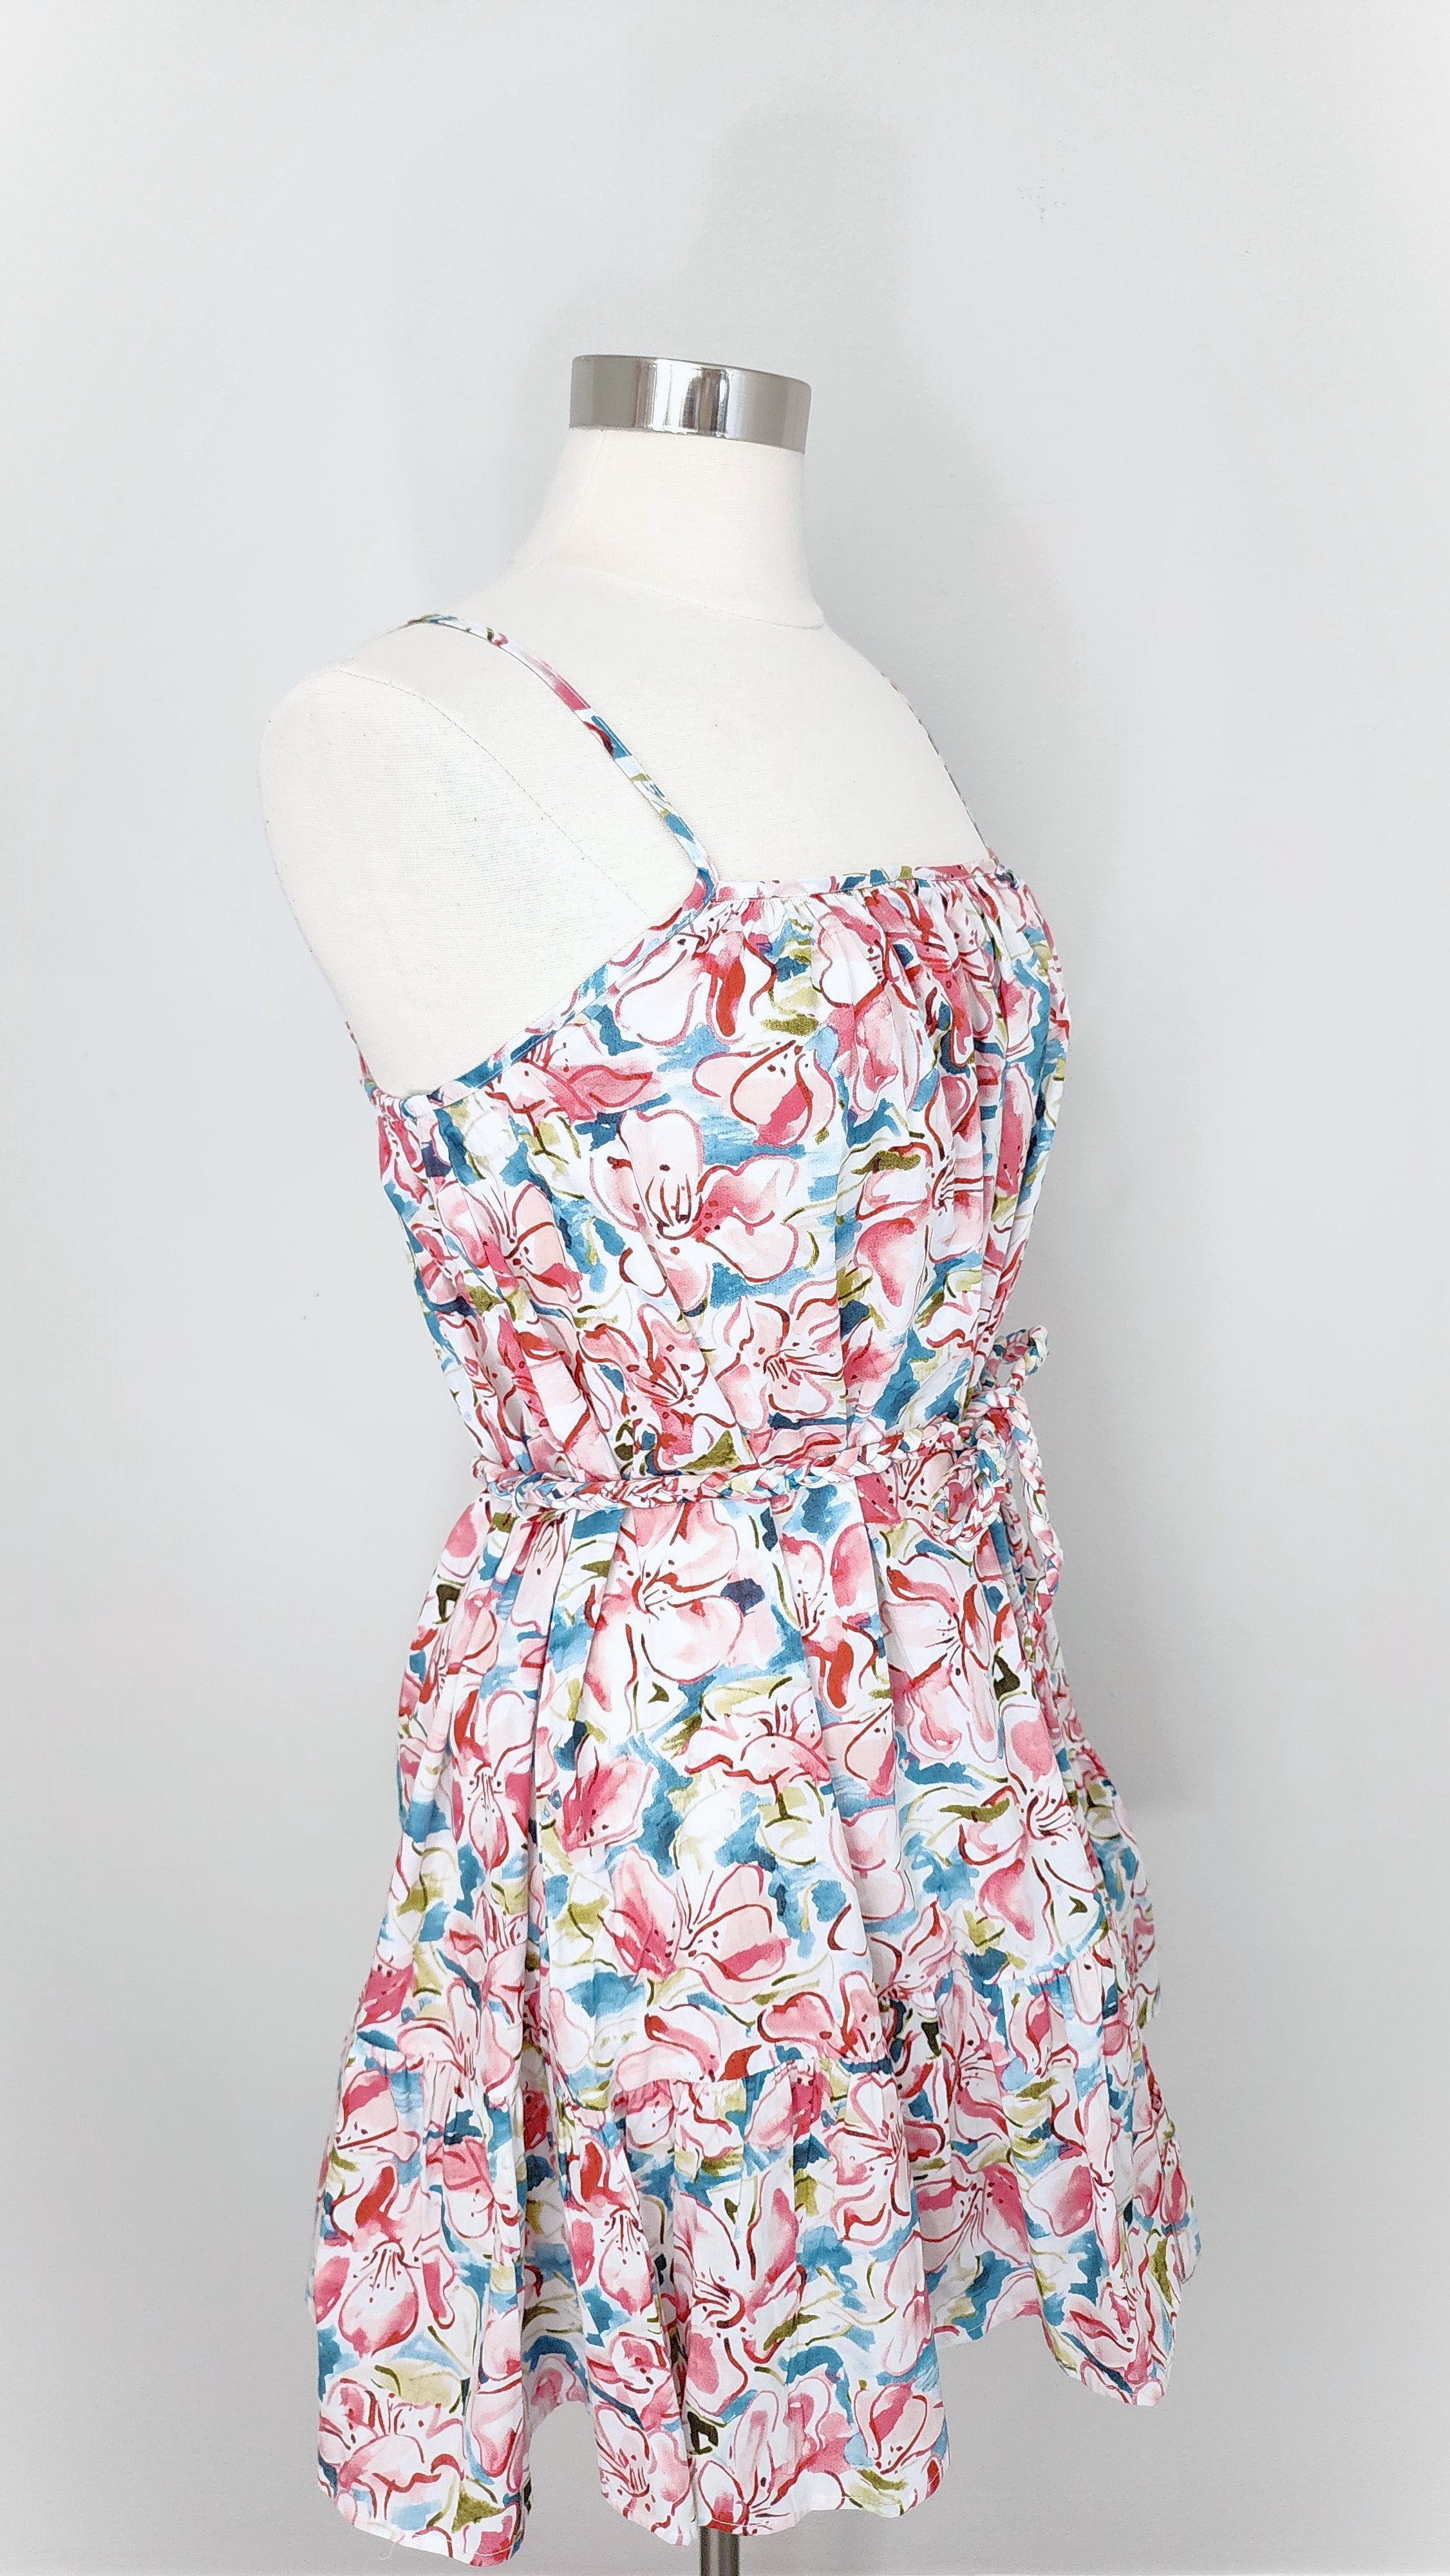 Summer Floral Mini Dress